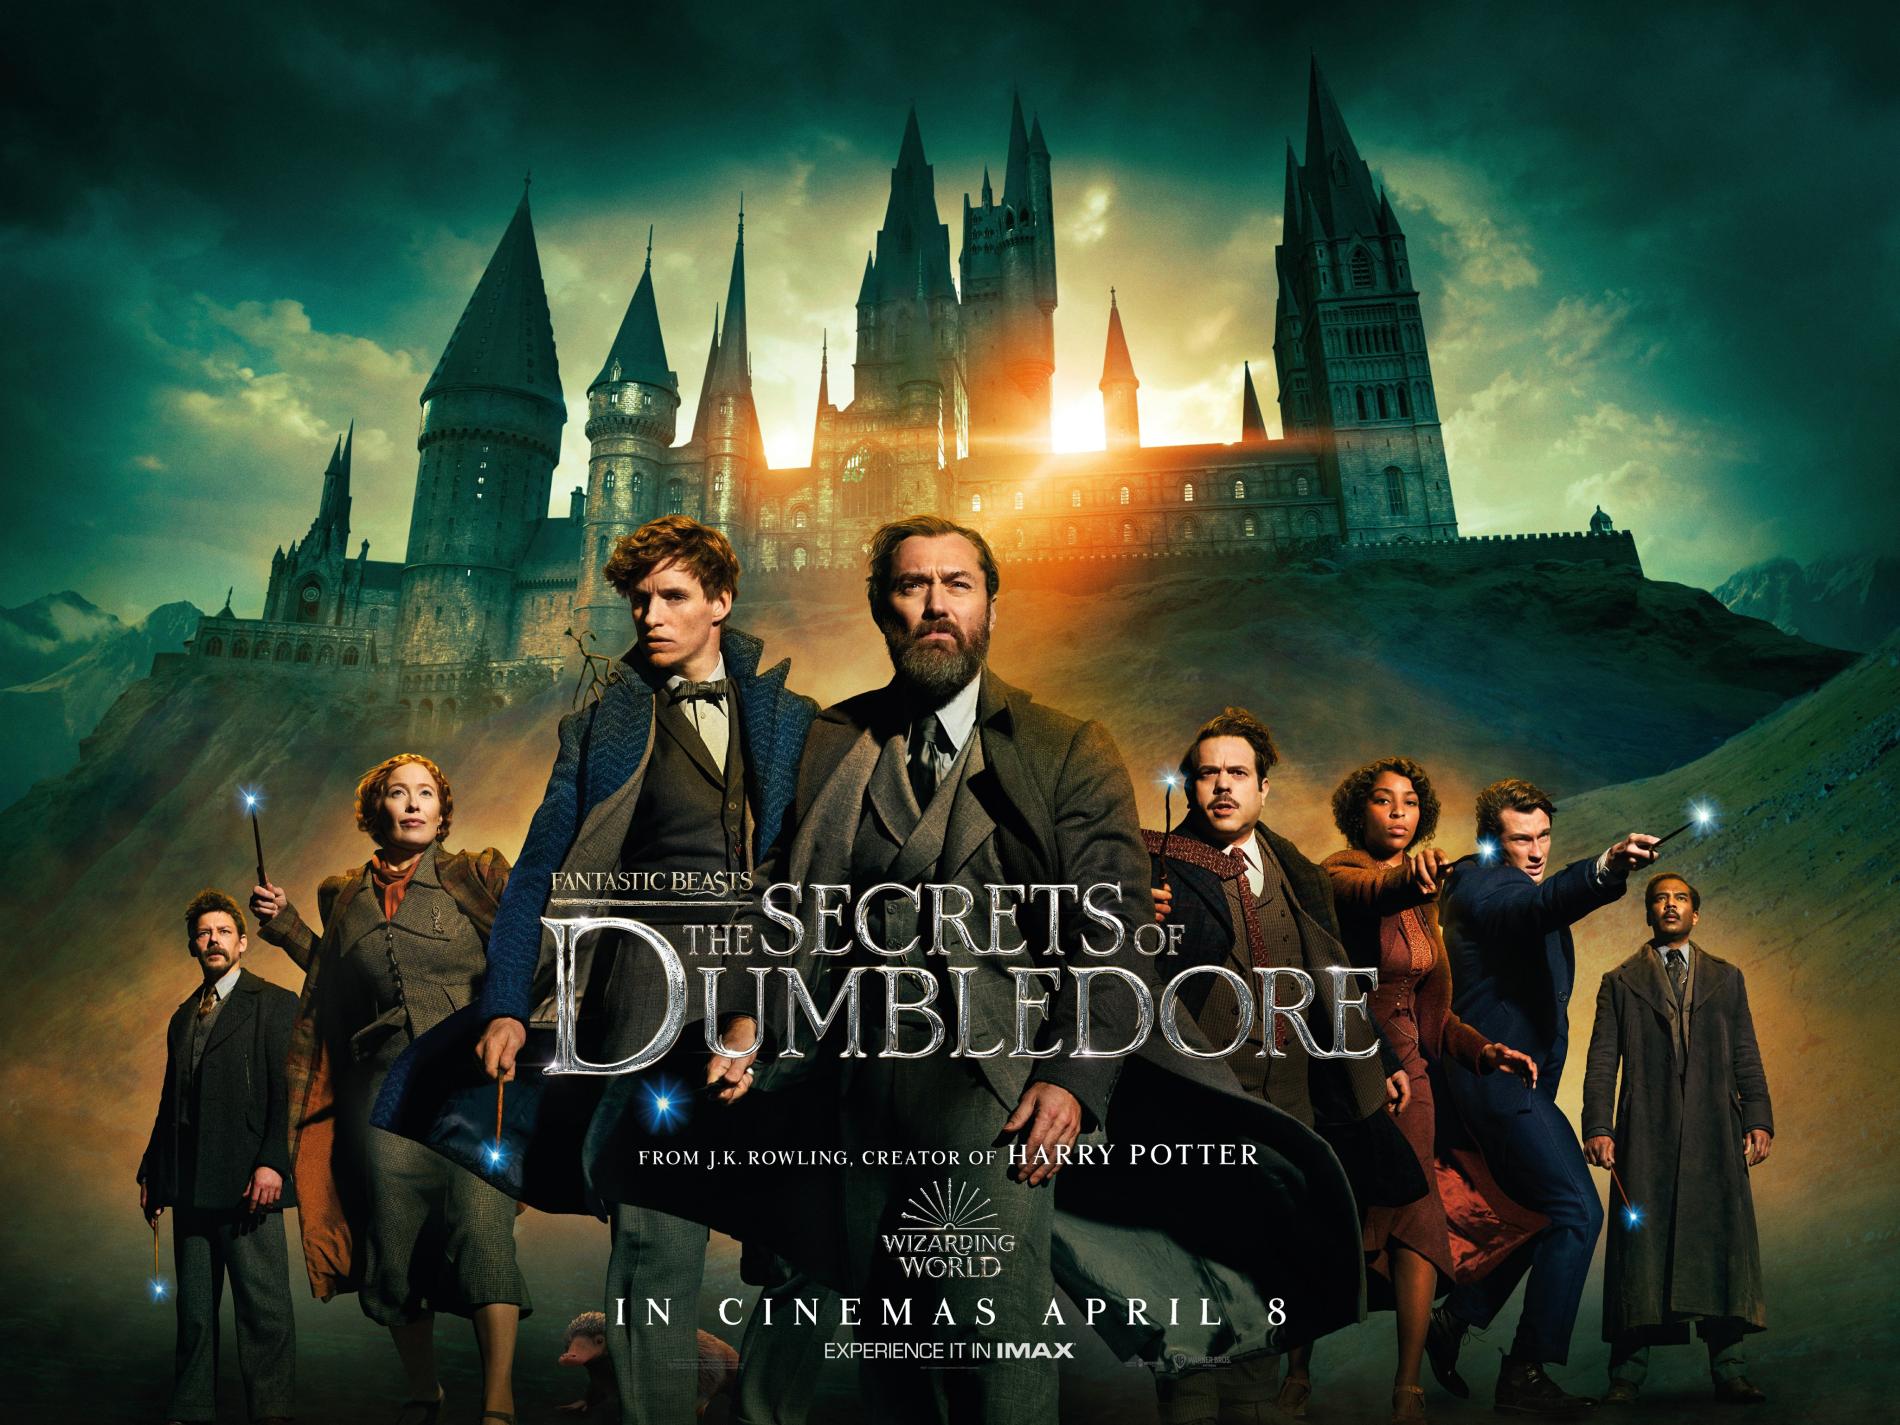 Rahasia Masa Lalu Terungkap, “Fantastic Beasts 3: The Secrets of Dumbledore”